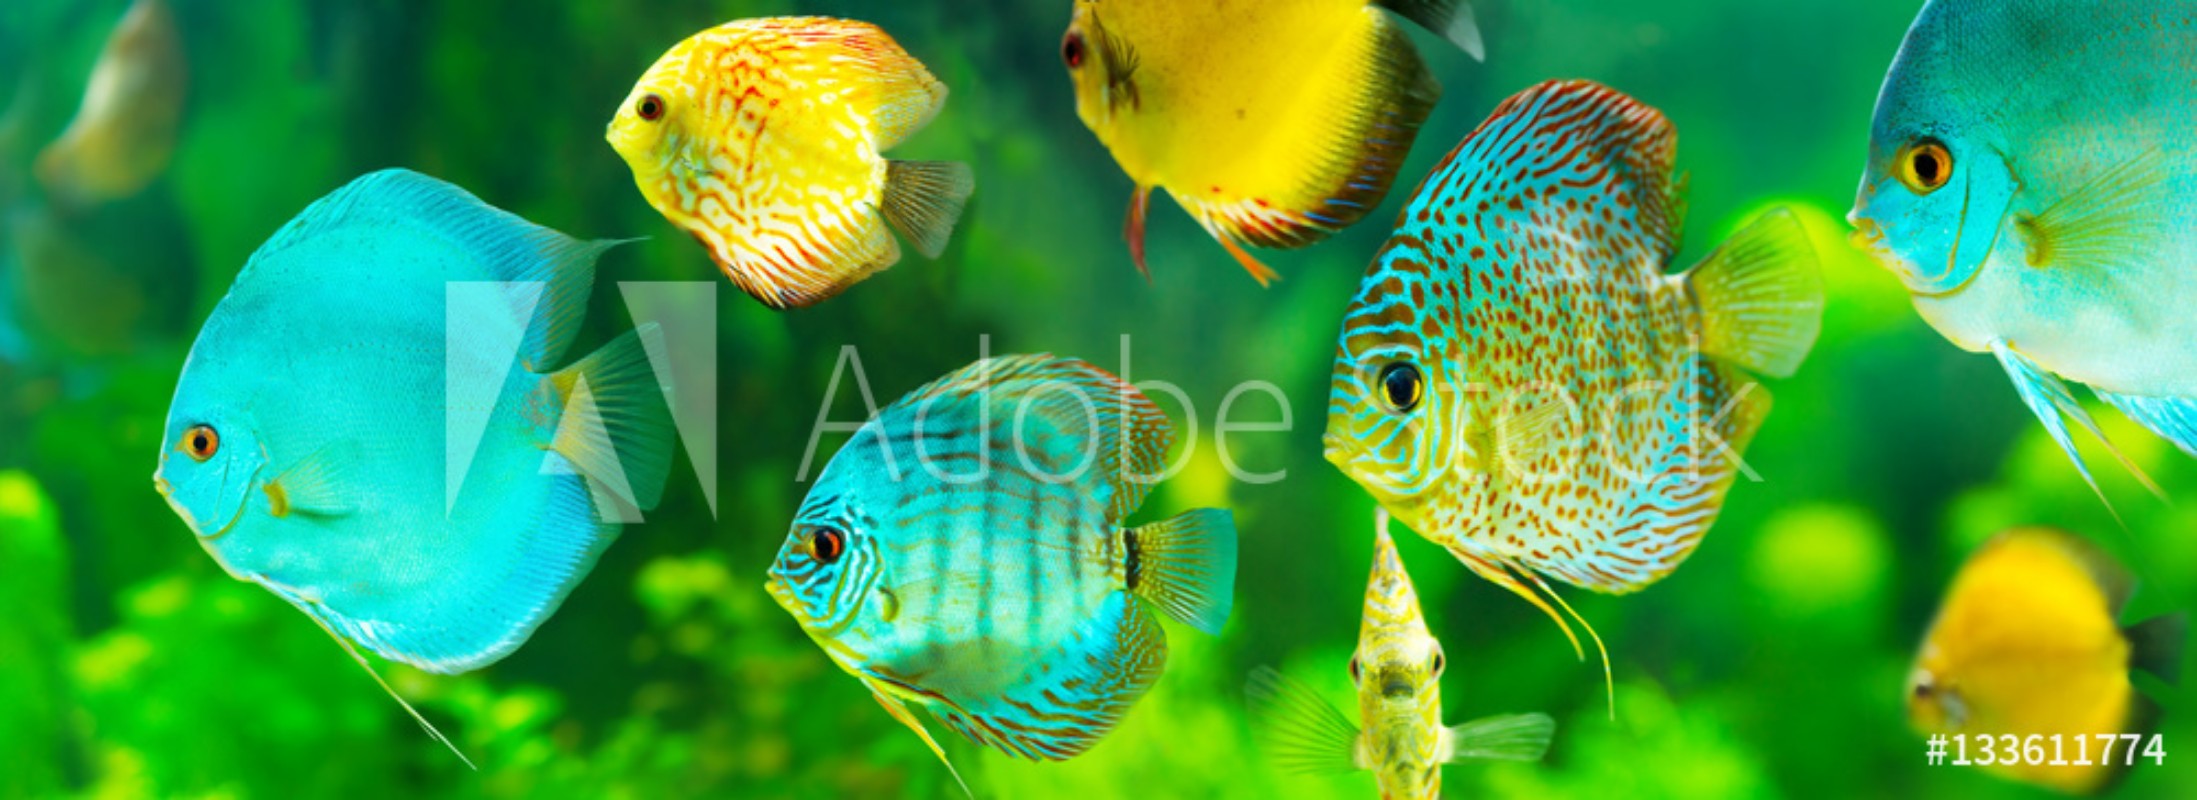 Image de Colorful tropical discus fish